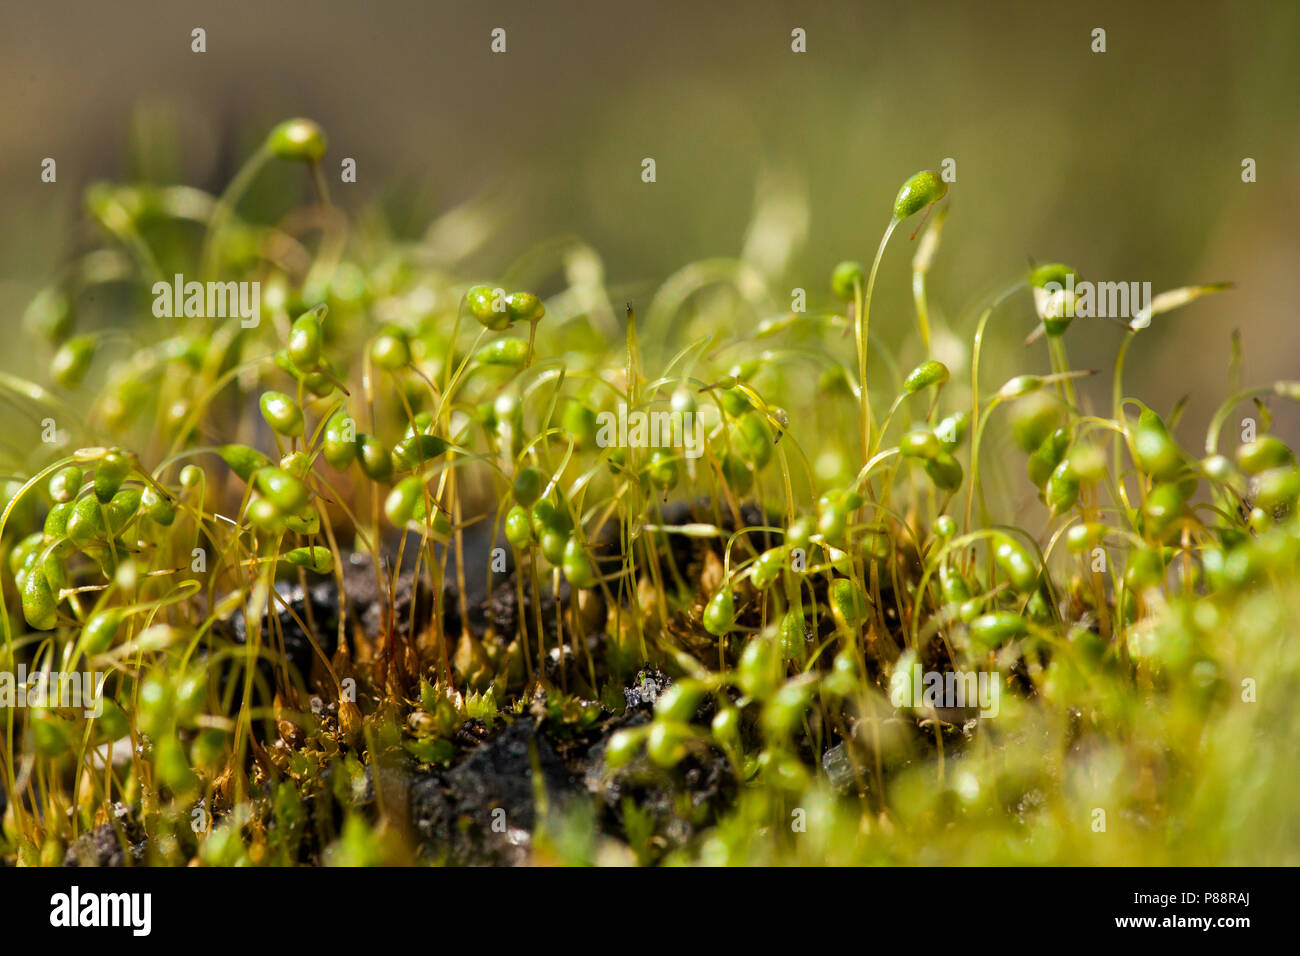 Sporendragend mos, Moss with sporophytes Stock Photo